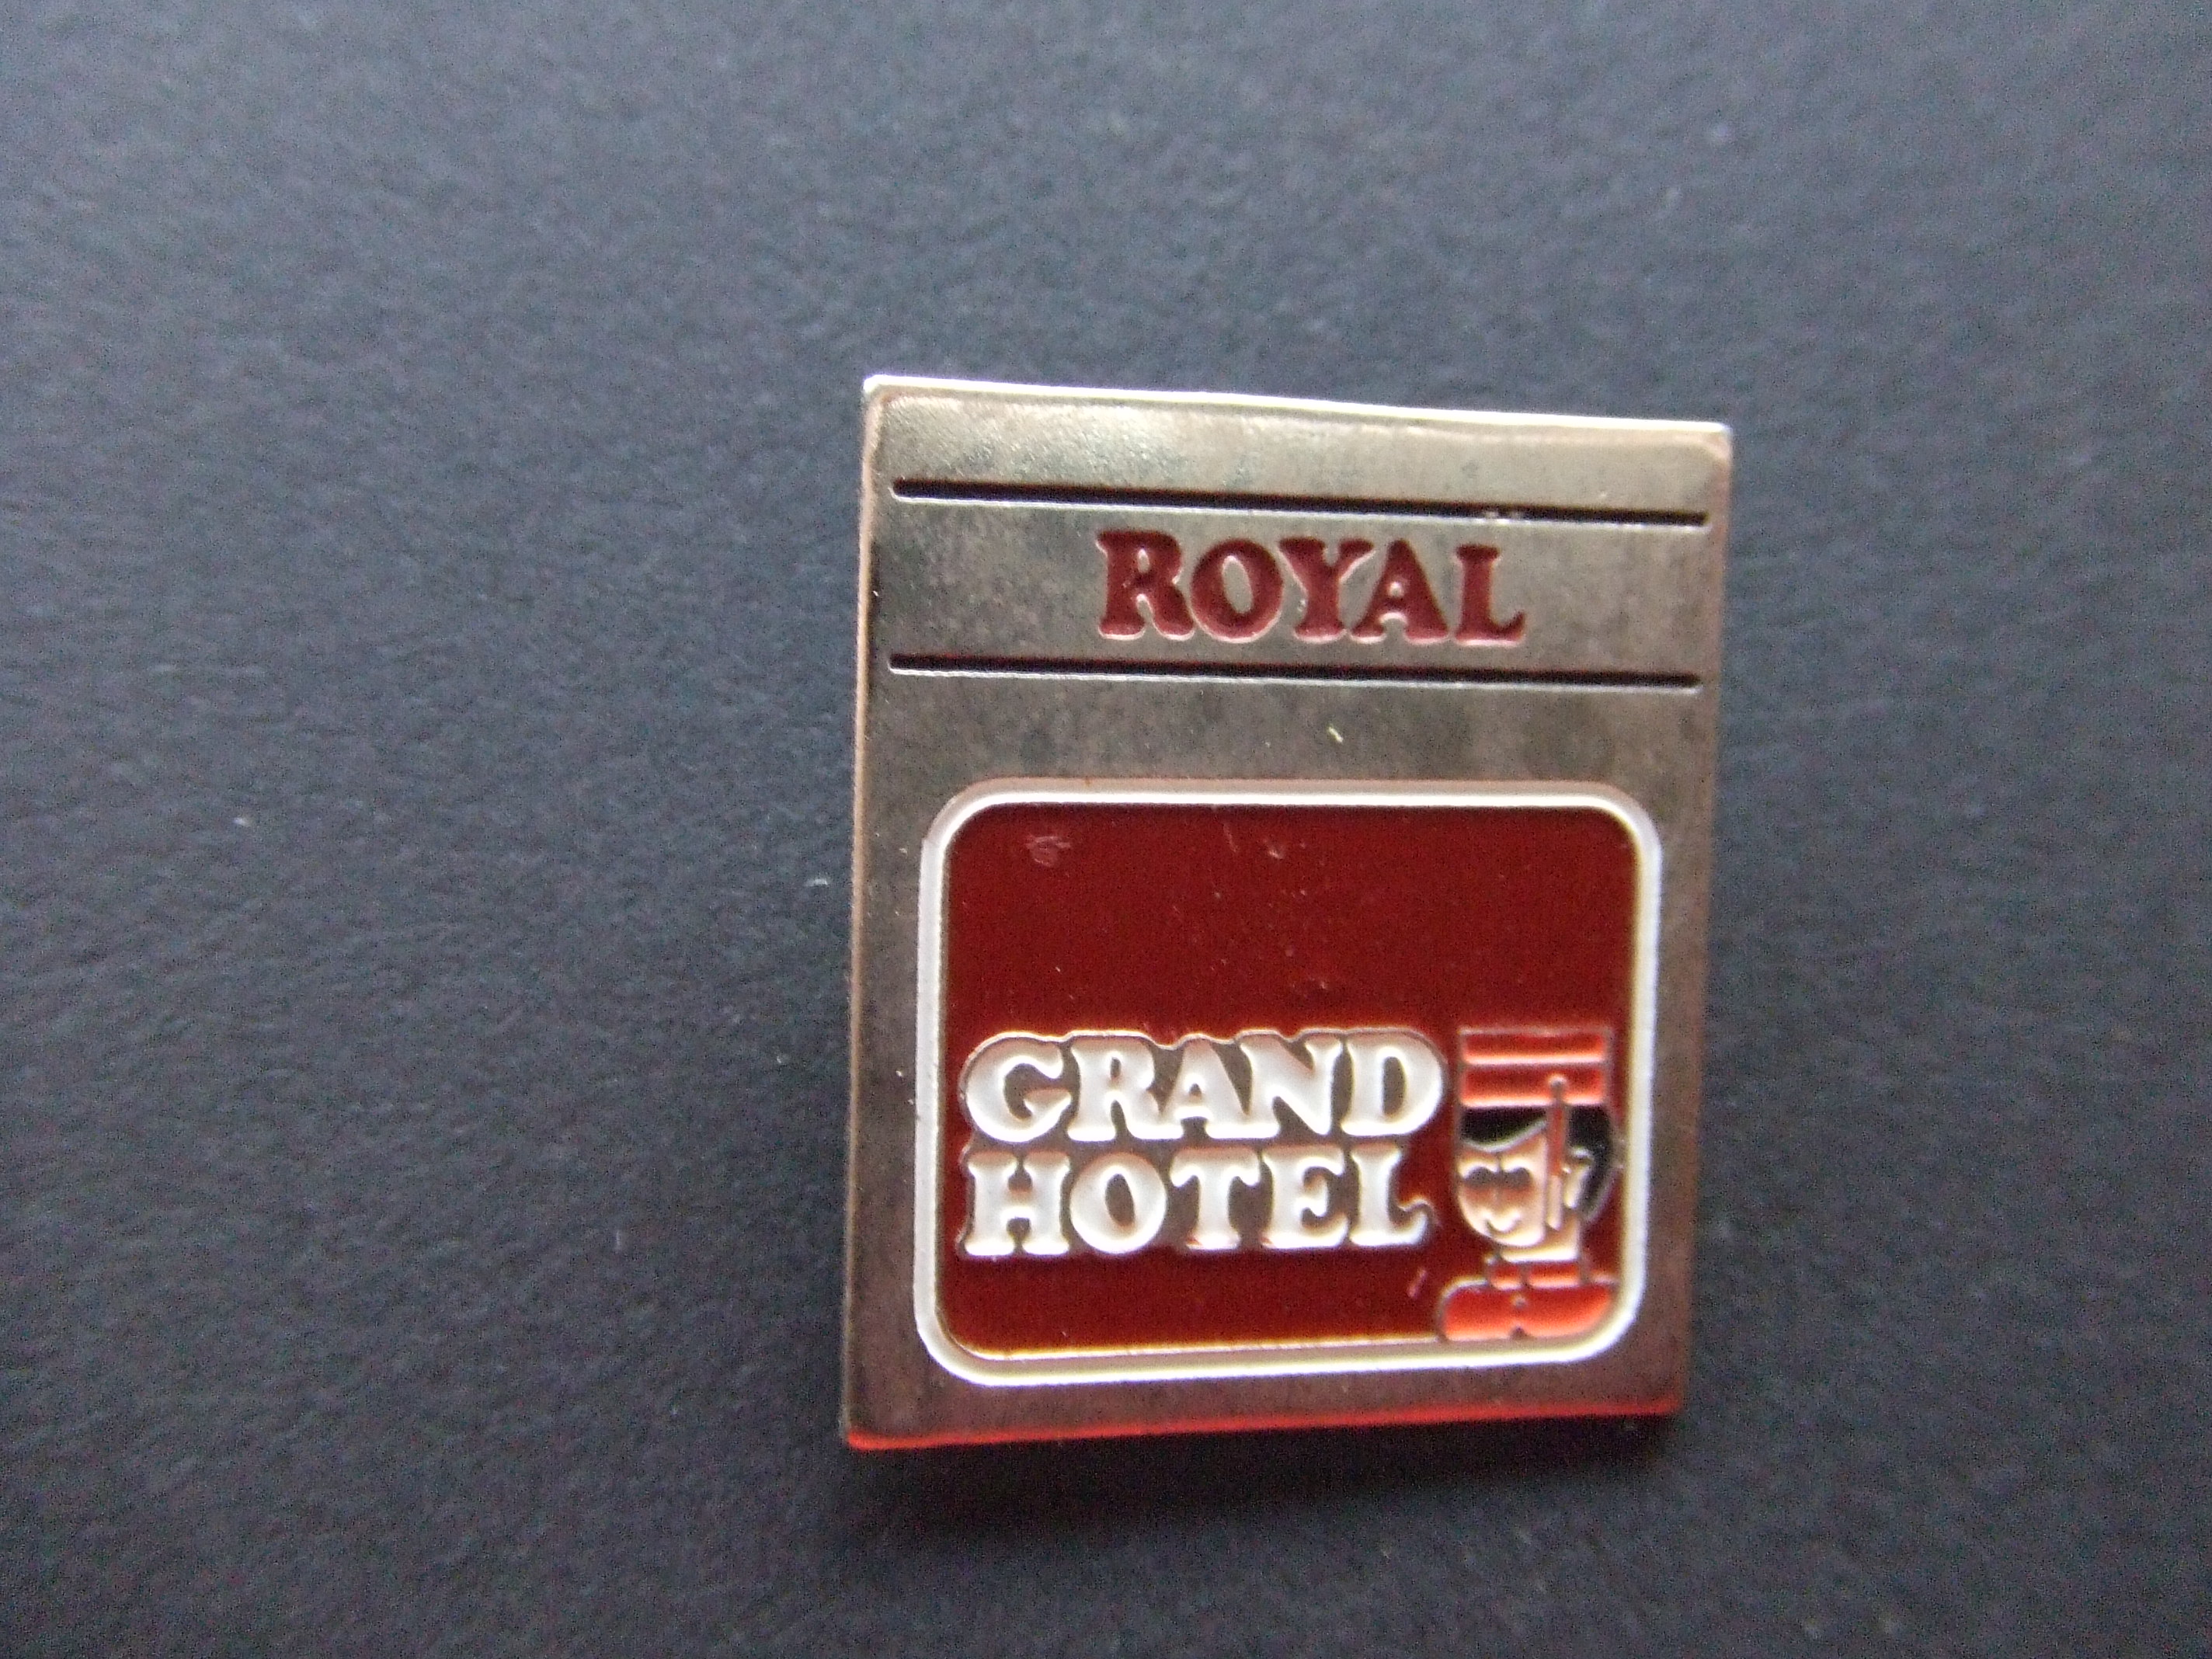 Royal koffie Grand Hotel